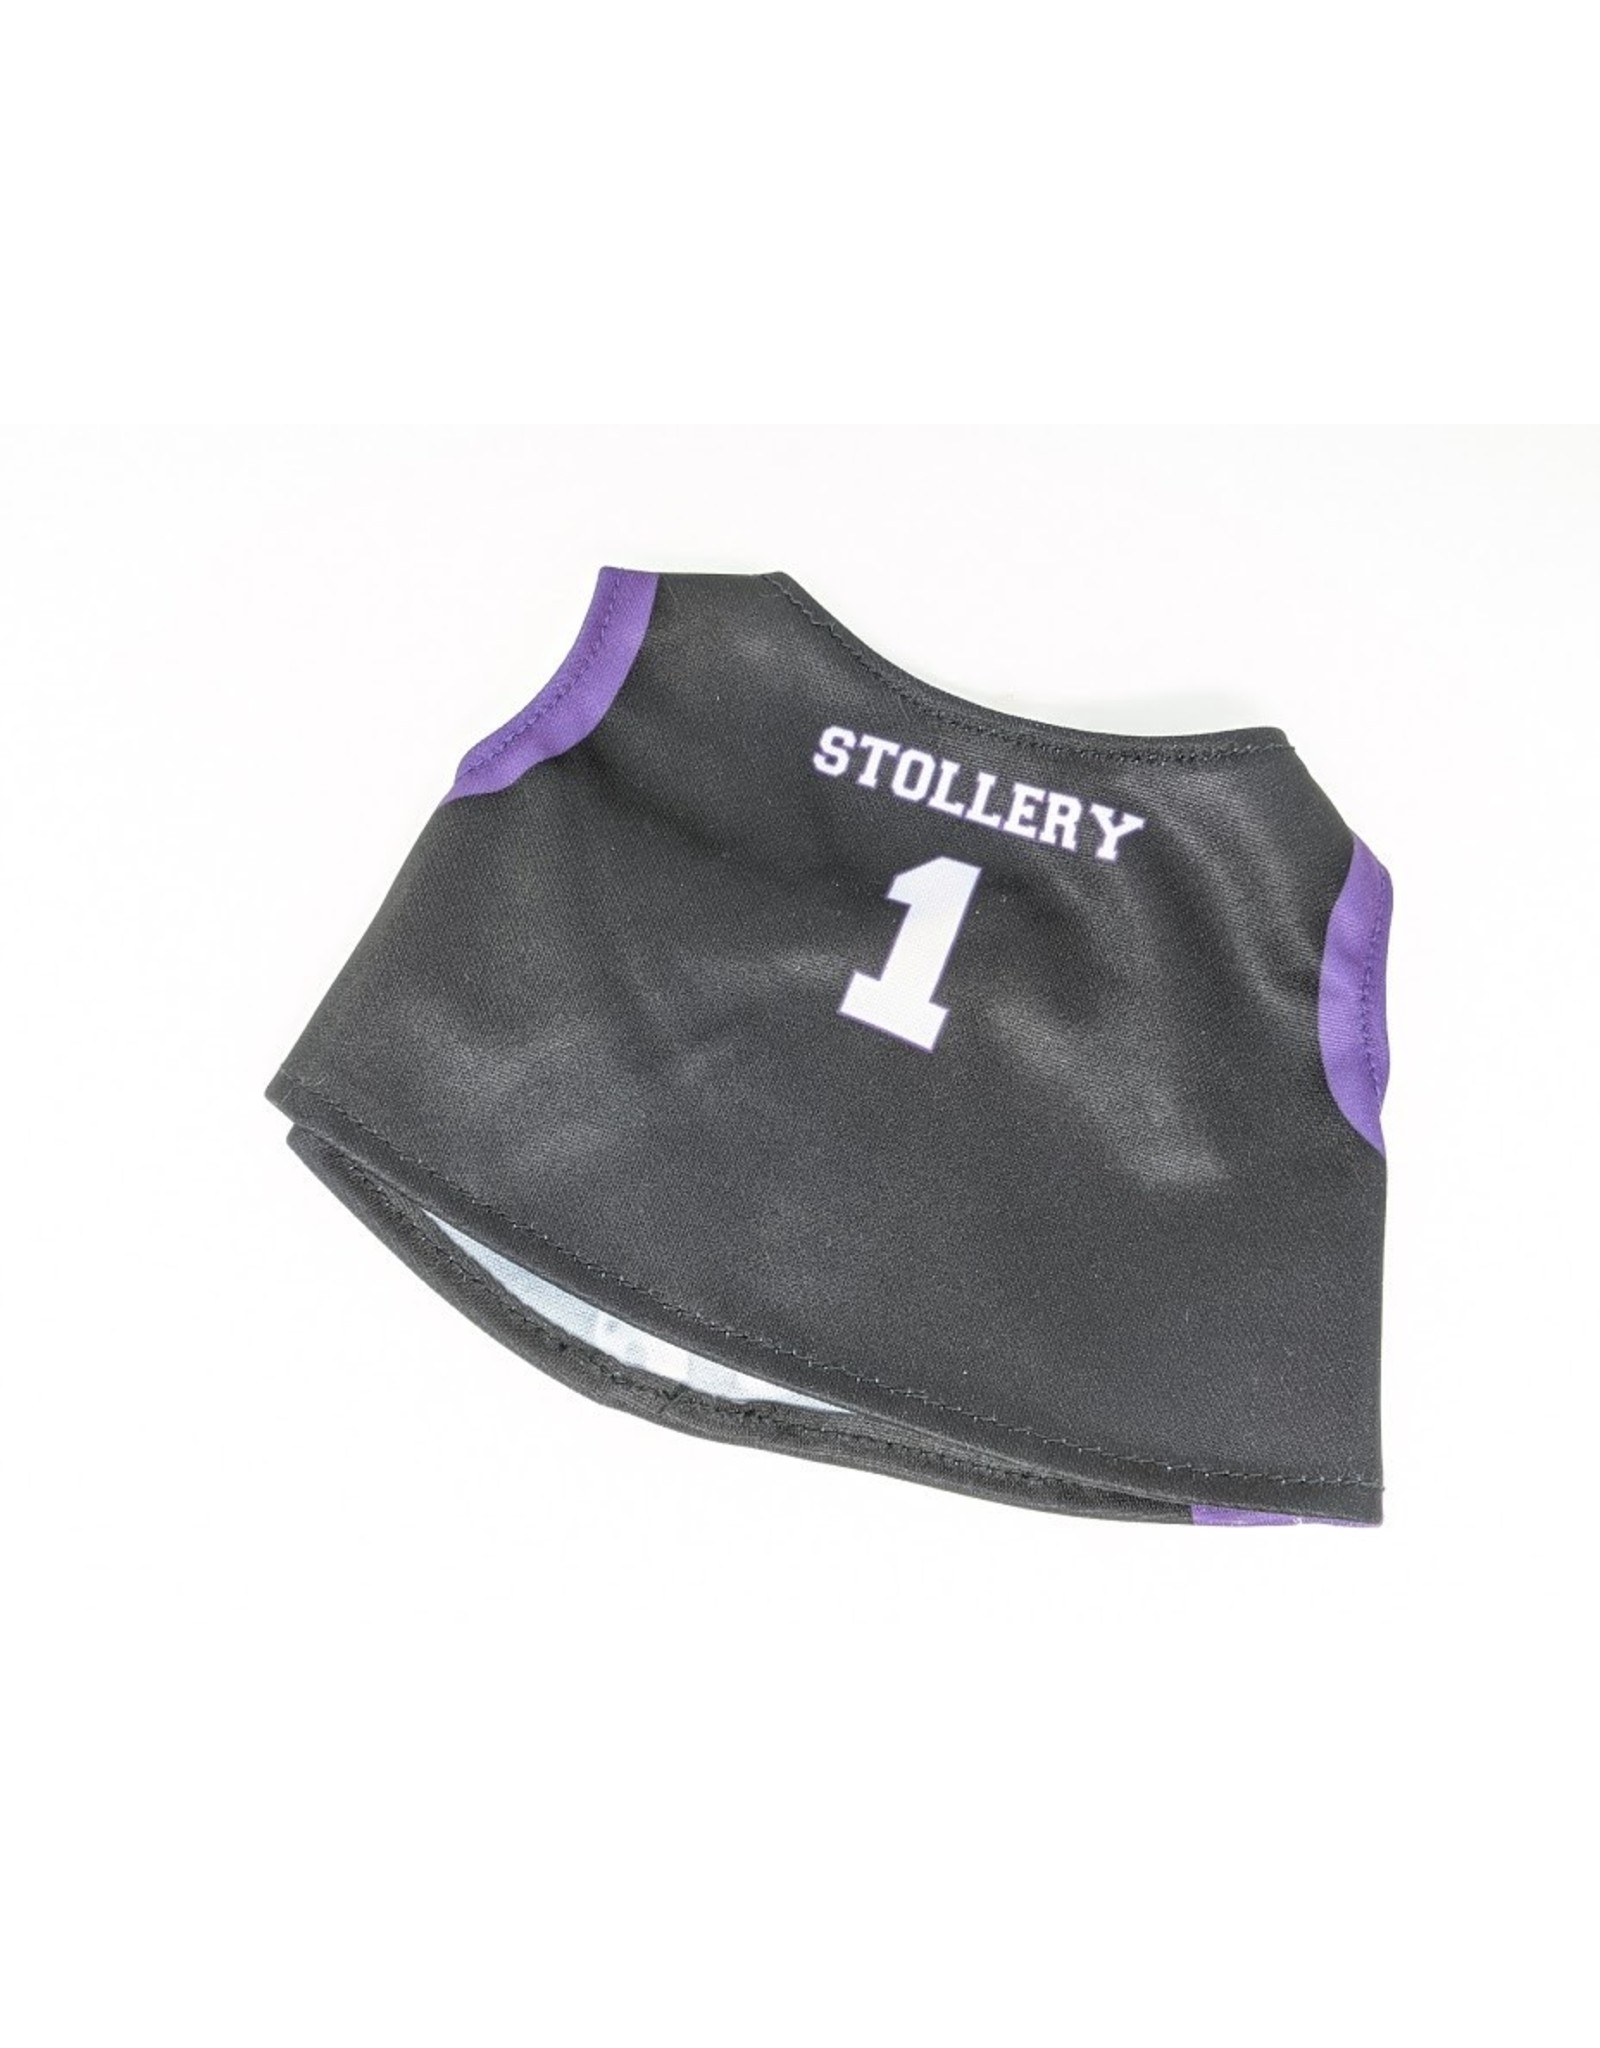 Stollery Bearwear - basketball jersey